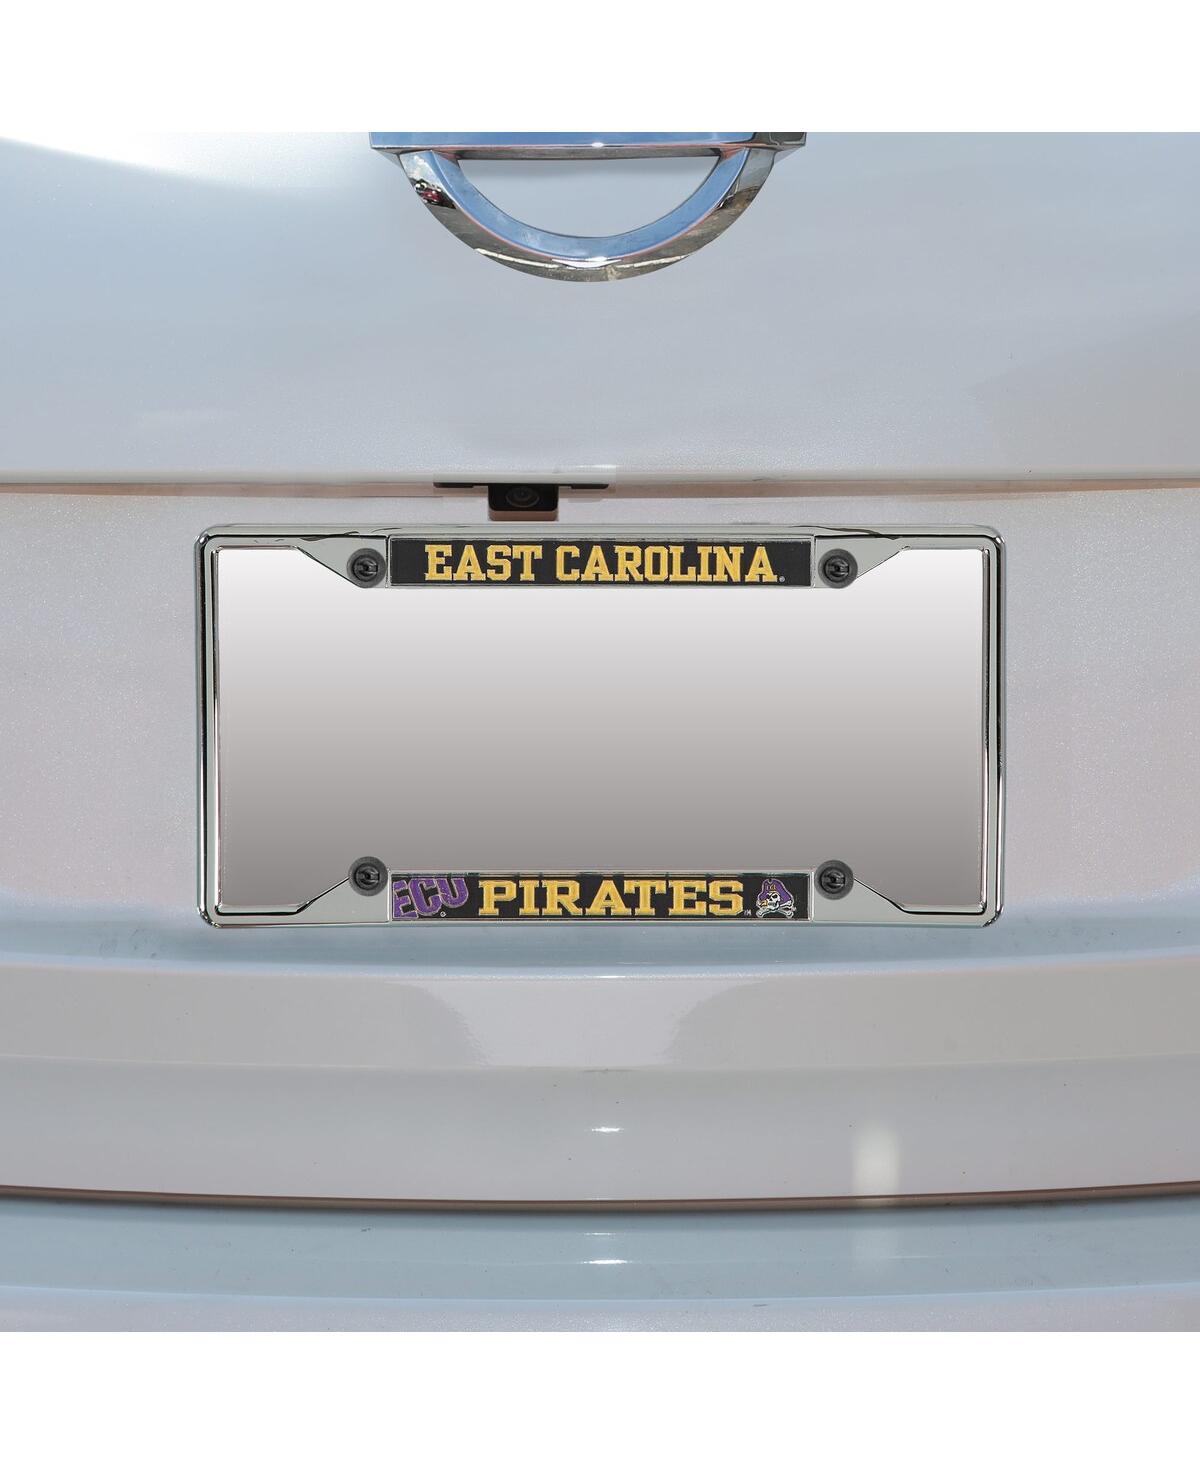 East Carolina Pirates Small Over Small Mega License Plate Frame - Gray